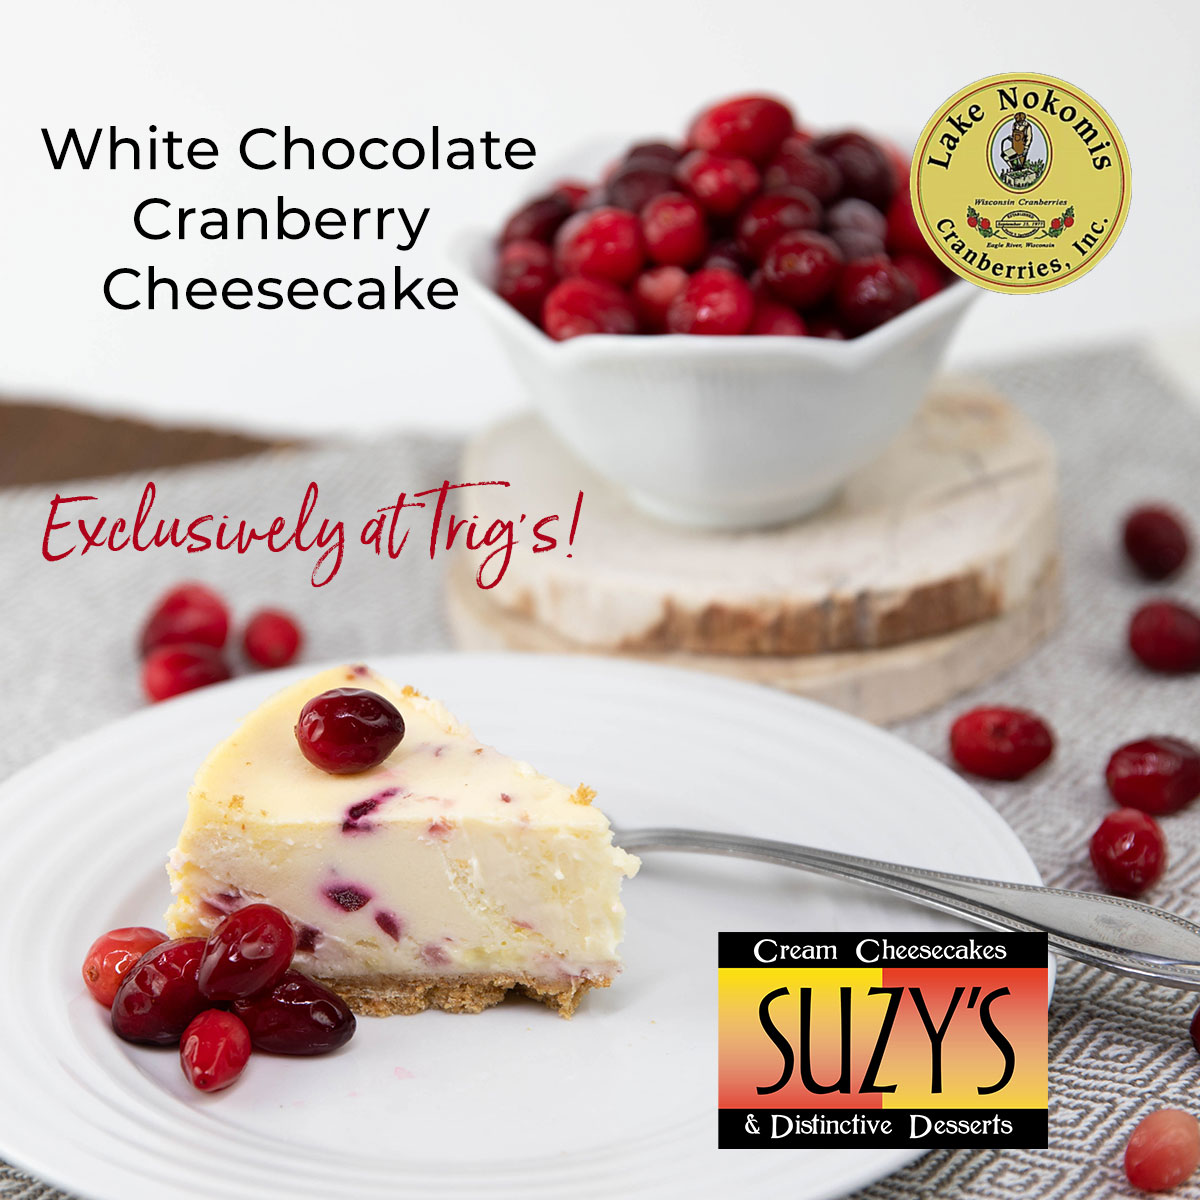 Suzy’s Cheesecake White Chocolate Cranberry Cheesecake 12 oz., $7.99